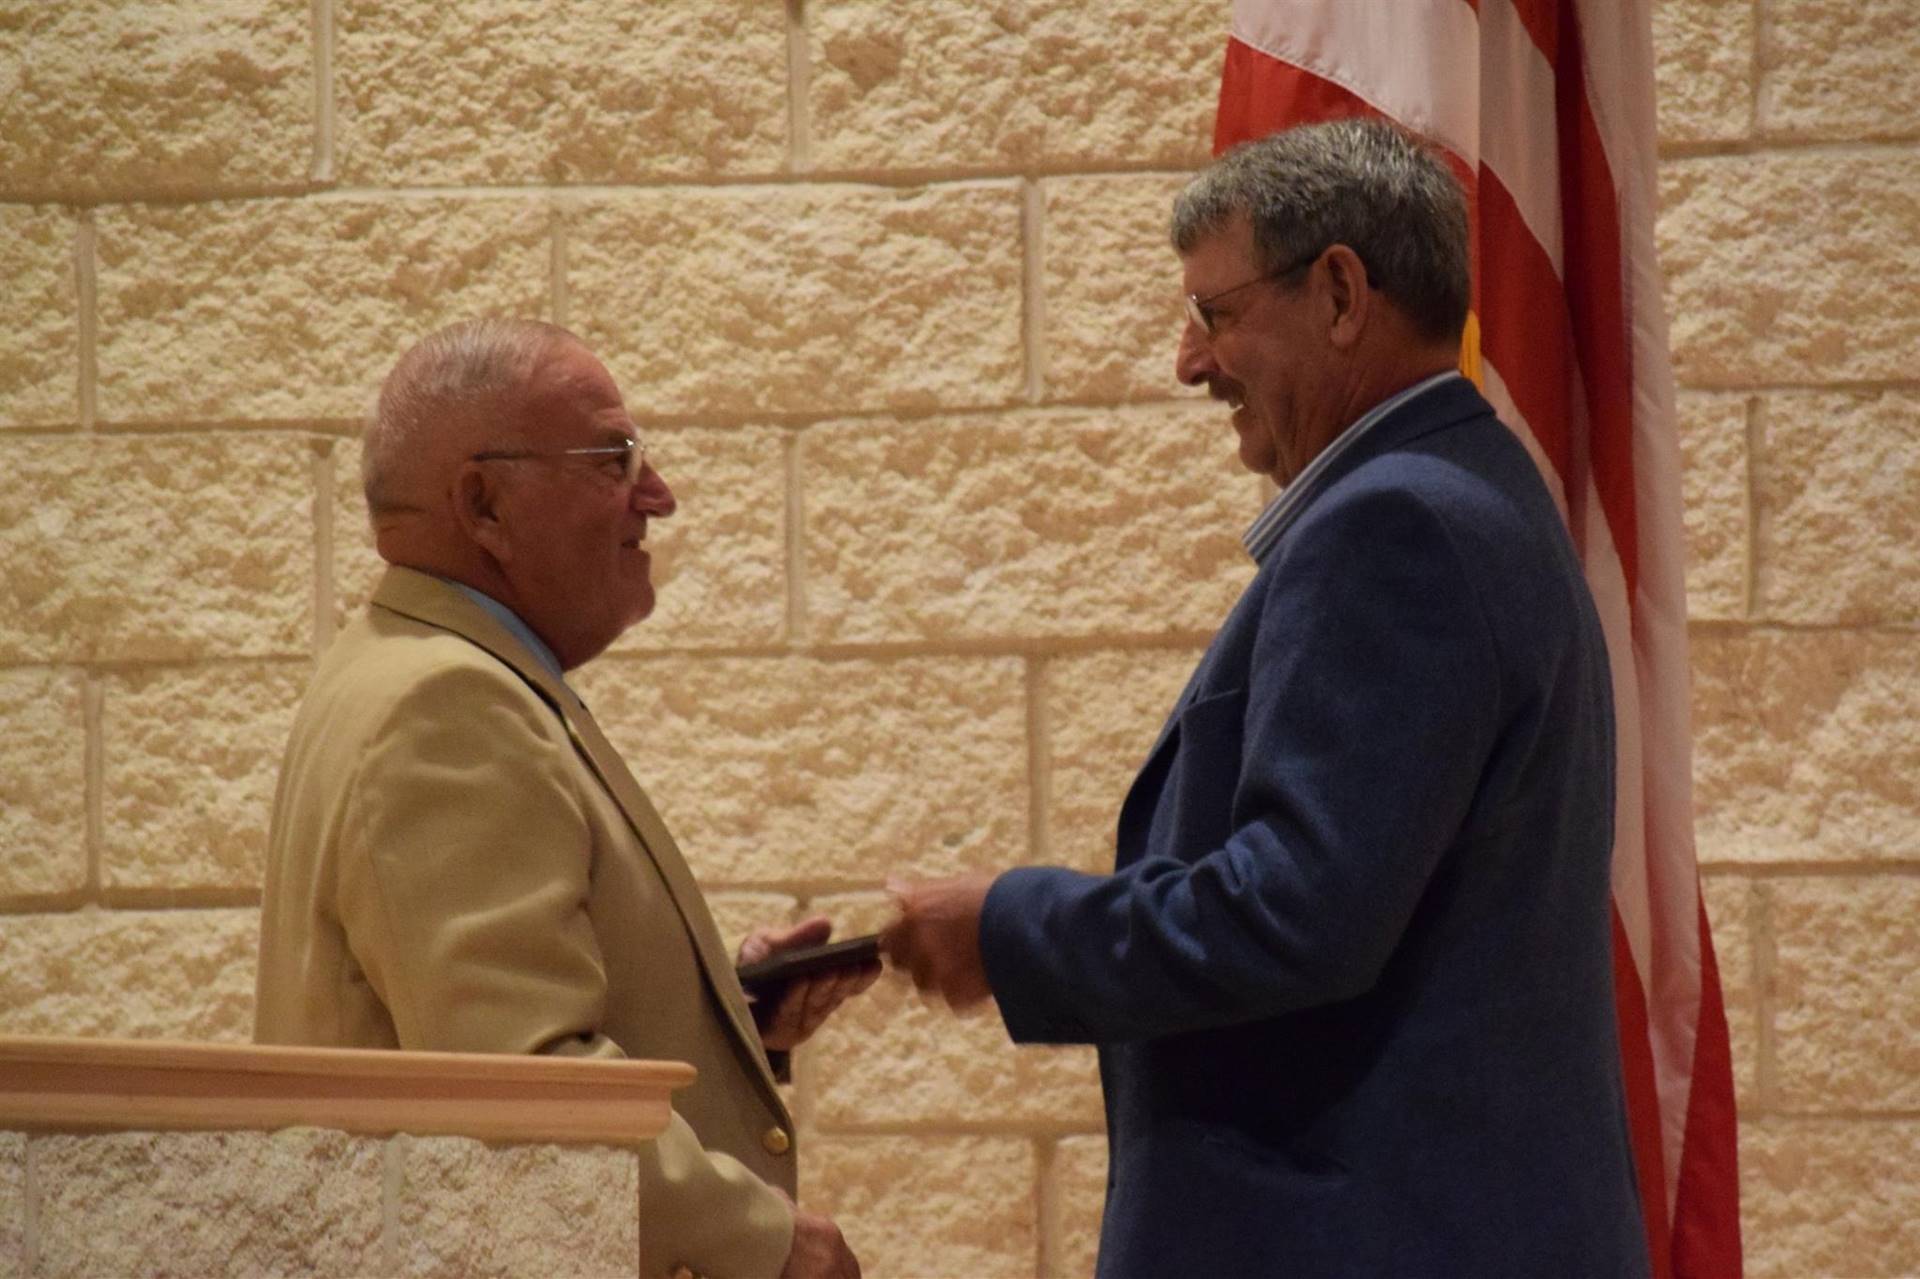 Honoree Mr. Marshman receiving a plaque from Mr. Weidman.